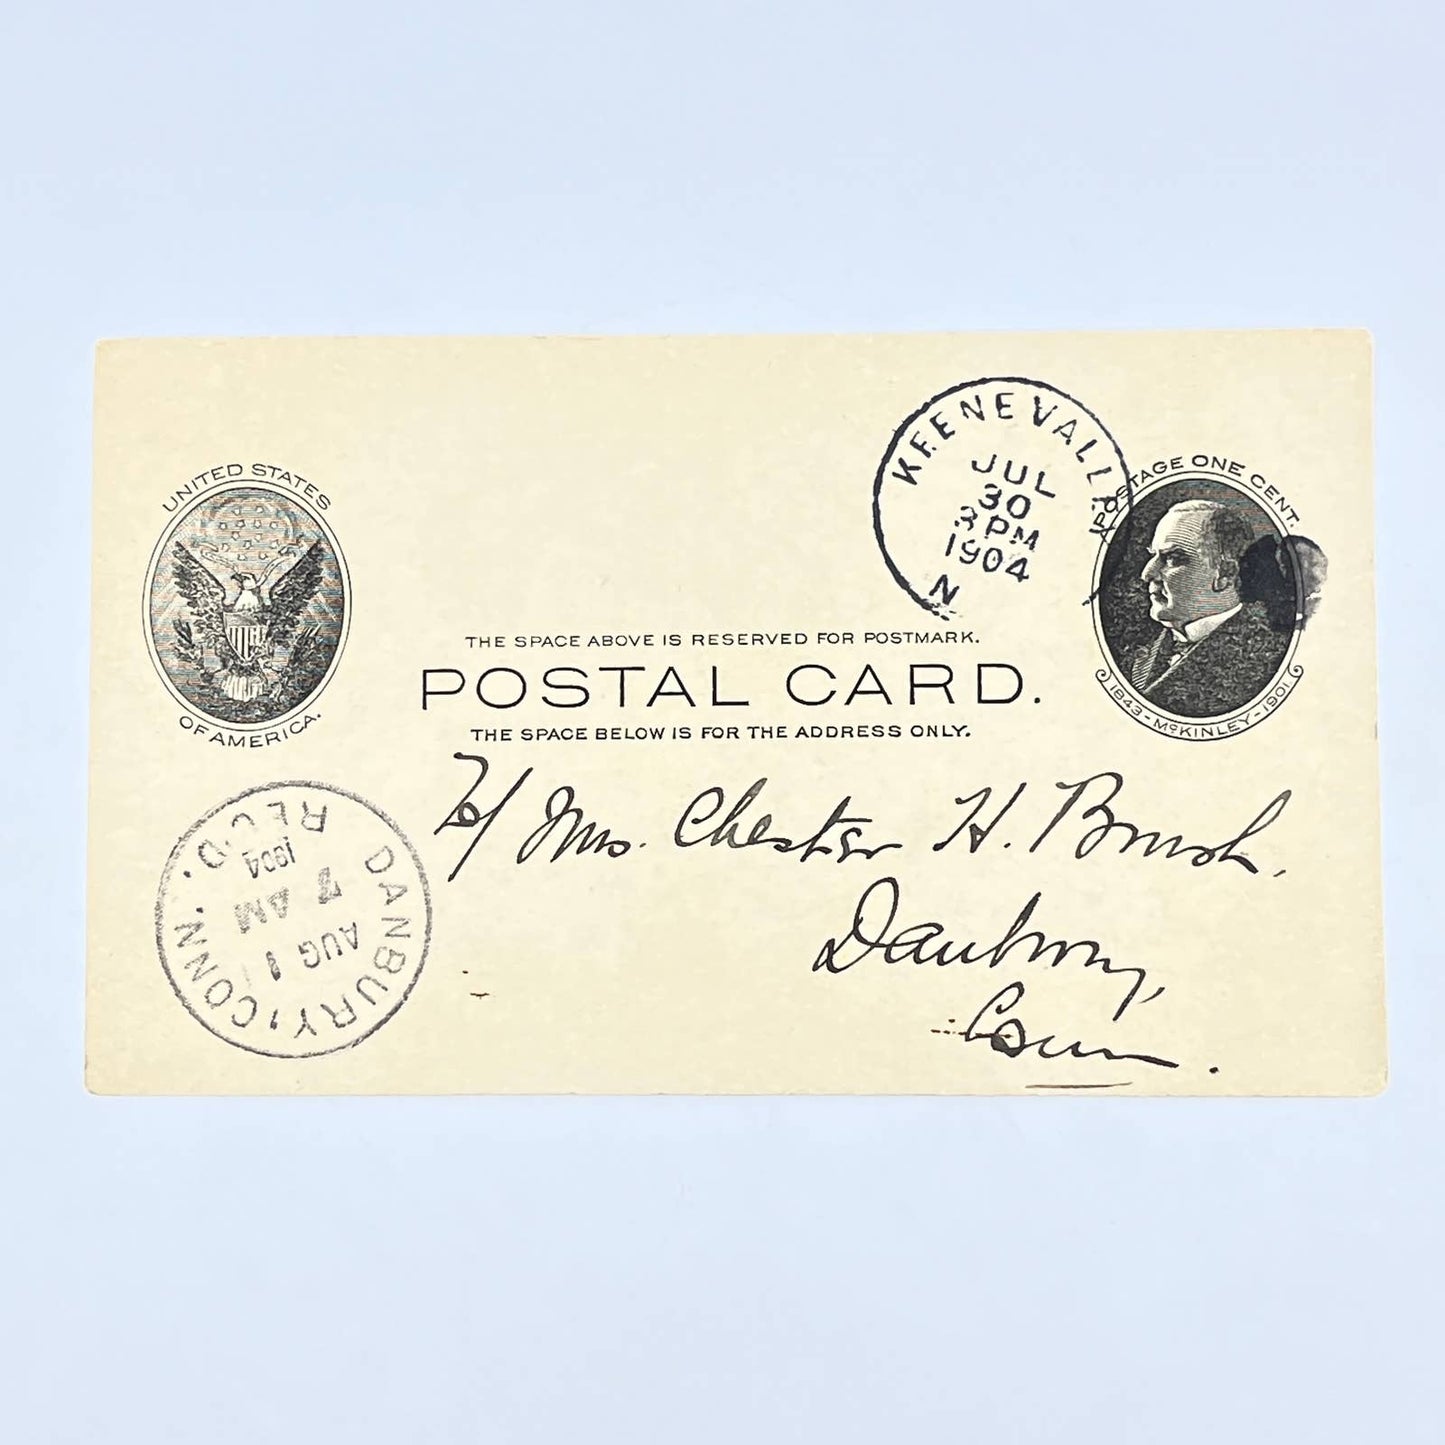 1904 Letter Mrs. William B. Glover Audubon Society CT Secretary Fairfield AC1